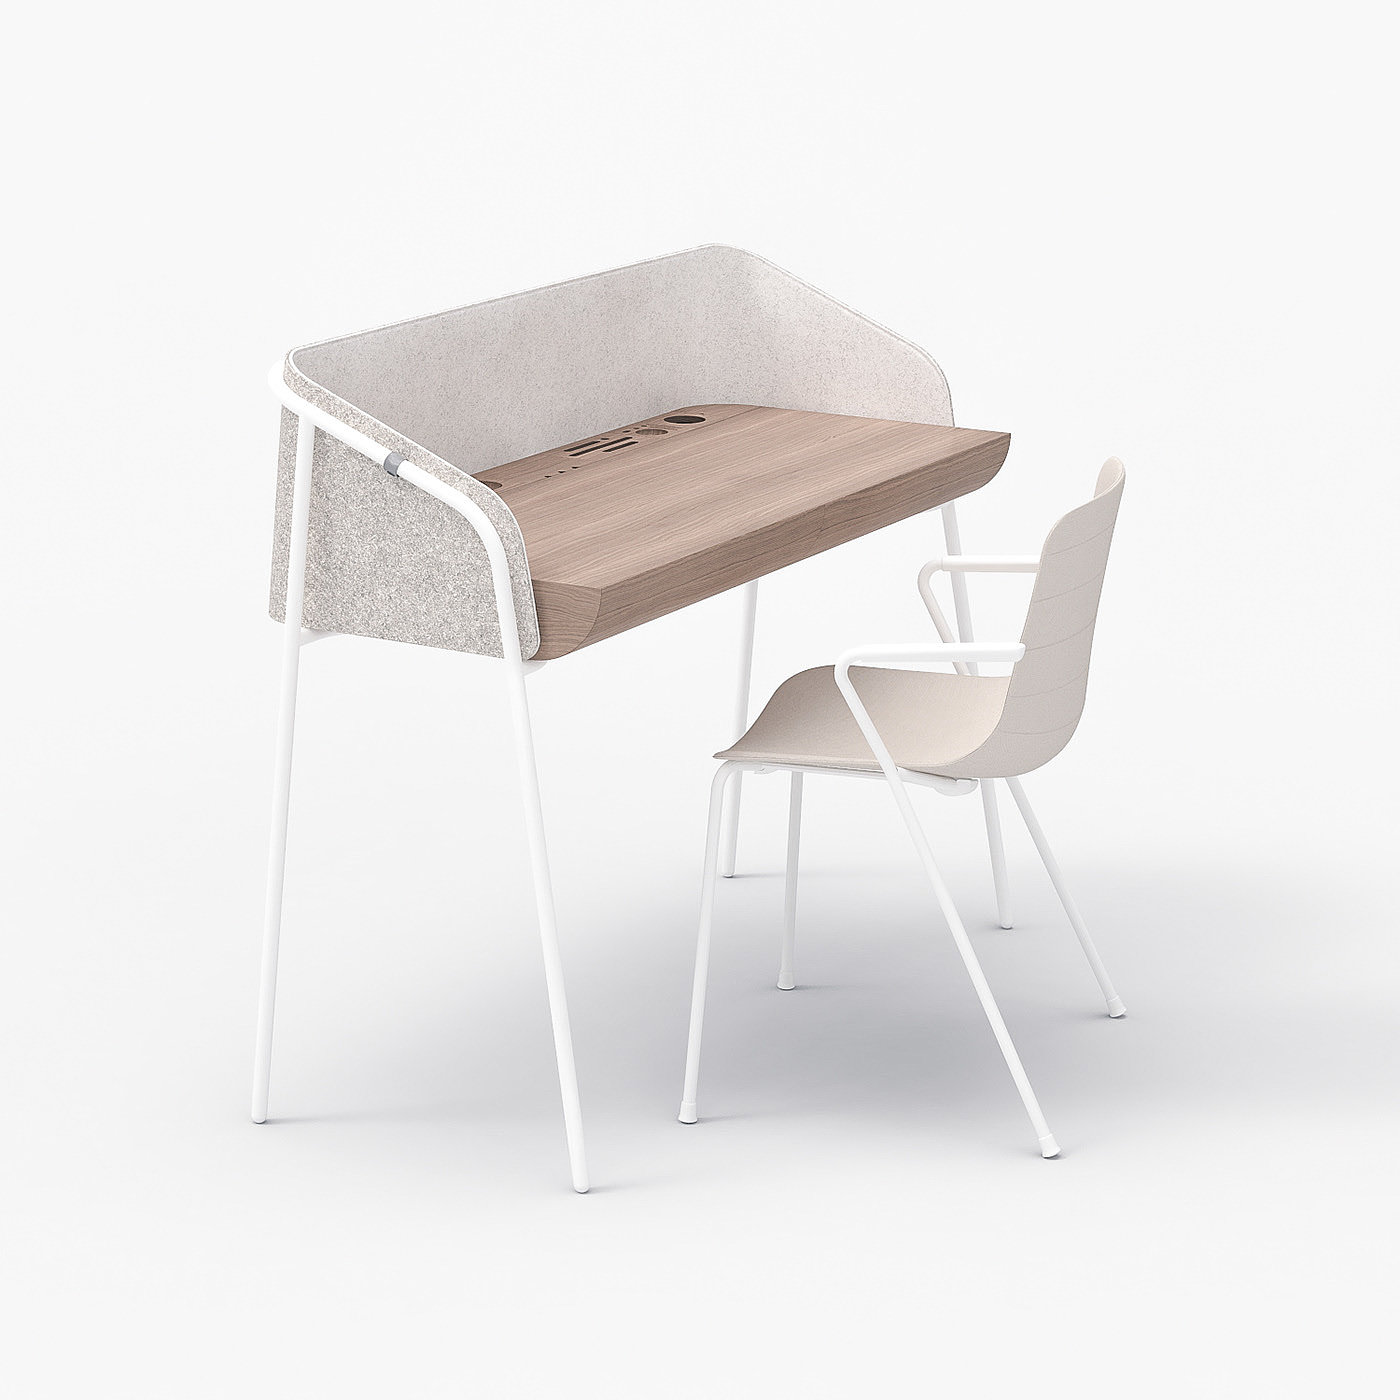 ODU，桌子，木质，斯德哥尔摩，Greenhouse2019，